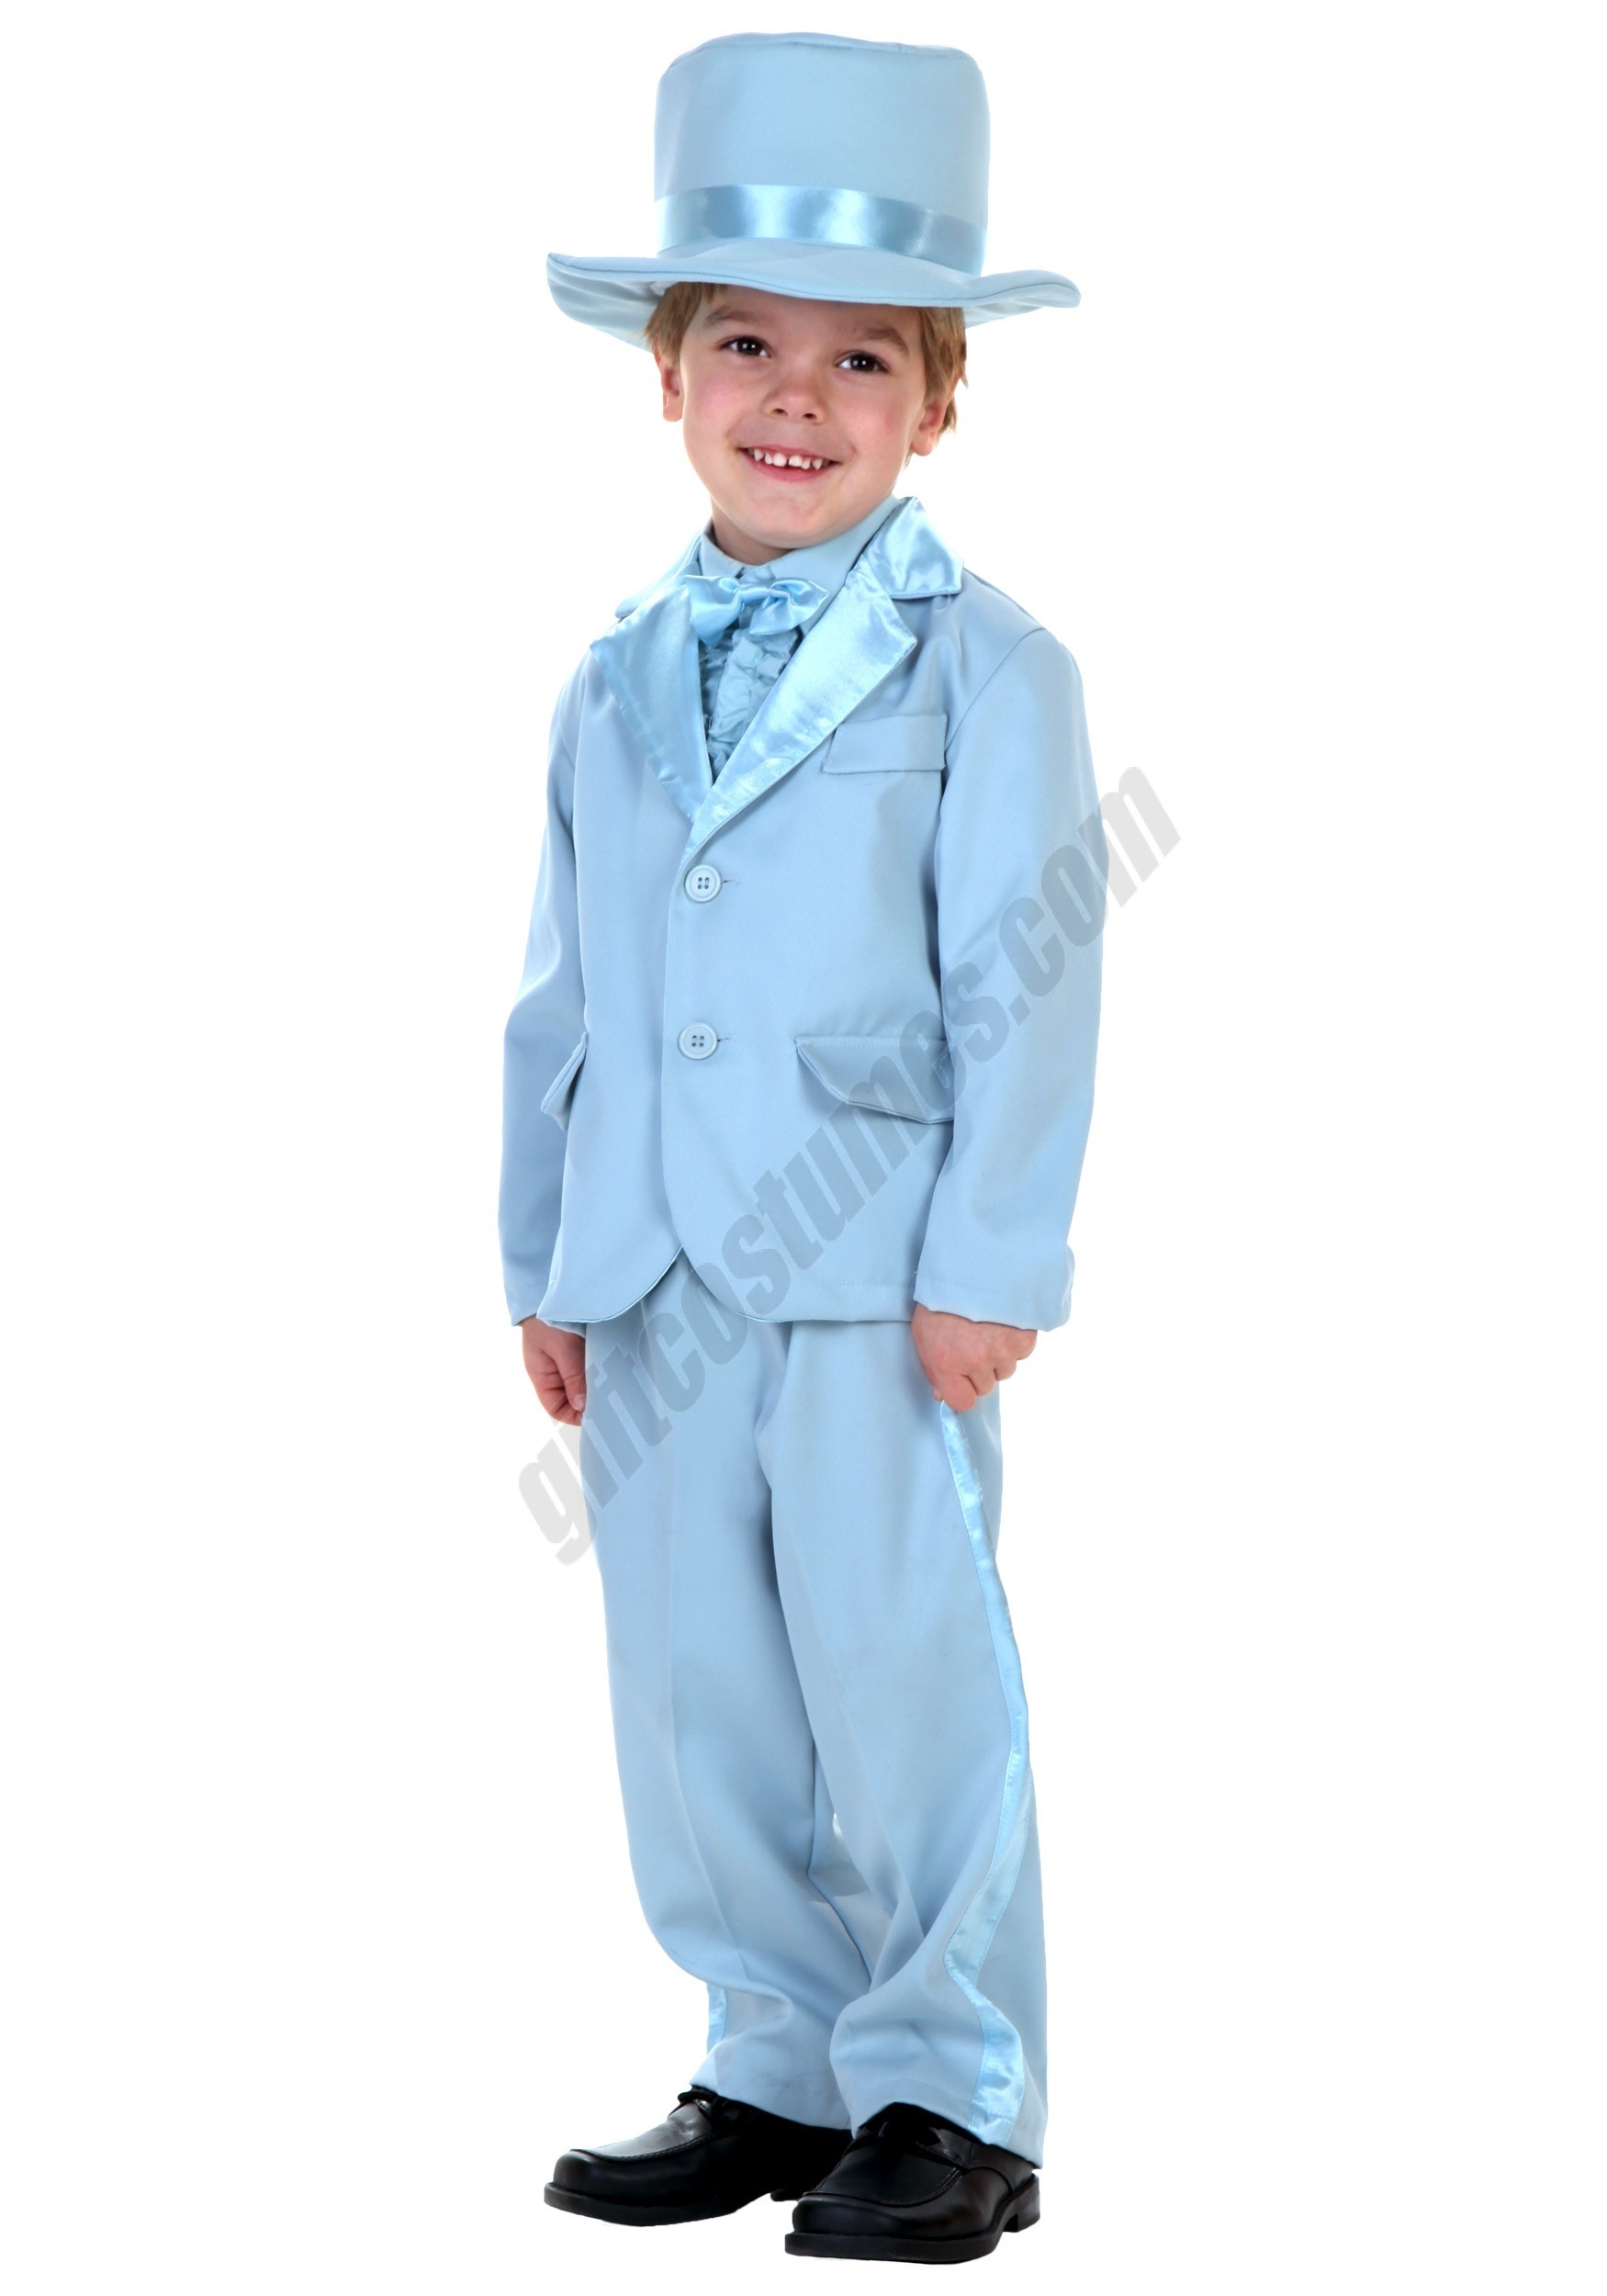 Toddler Blue Tuxedo Costume Promotions - Toddler Blue Tuxedo Costume Promotions